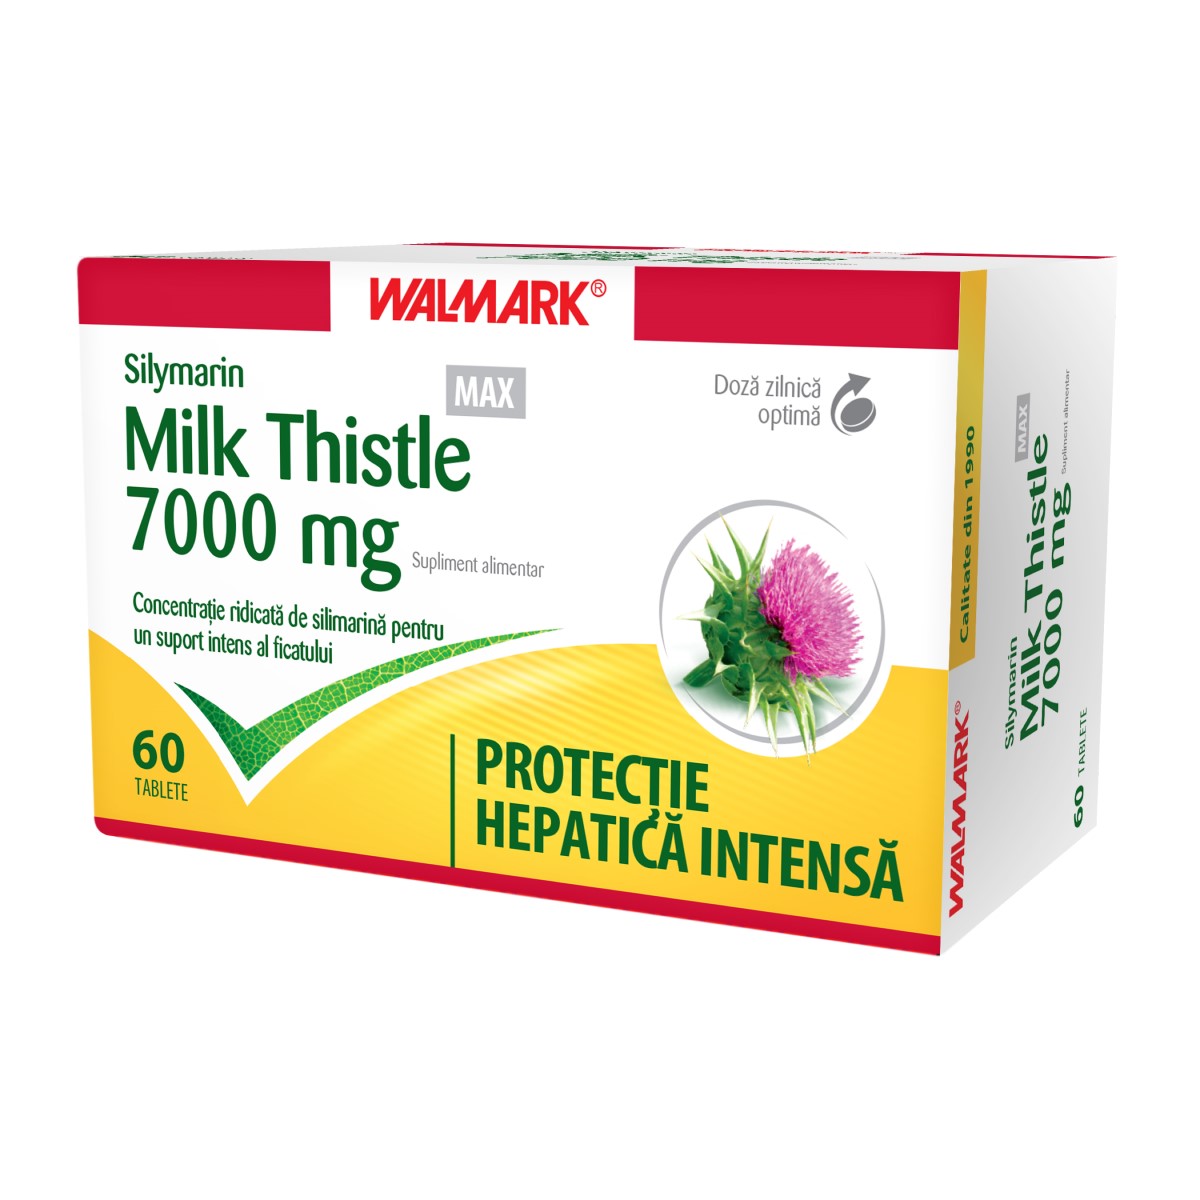 Silymarin Milk Thistle MAX  7000 mg, 60 comprimate filmate, Walmark